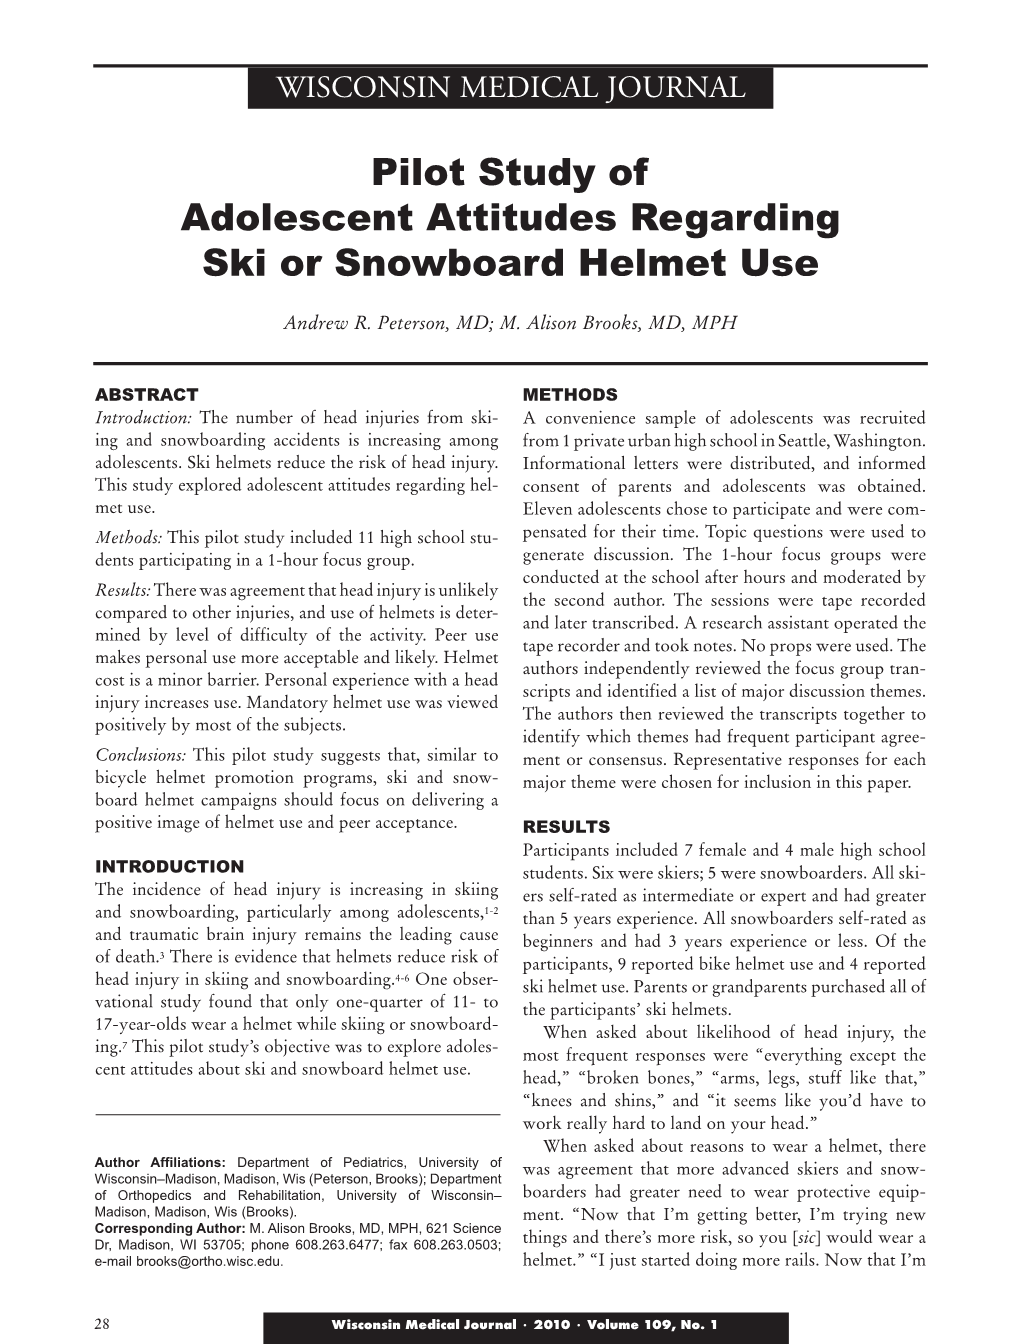 Pilot Study of Adolescent Attitudes Regarding Ski Or Snowboard Helmet Use